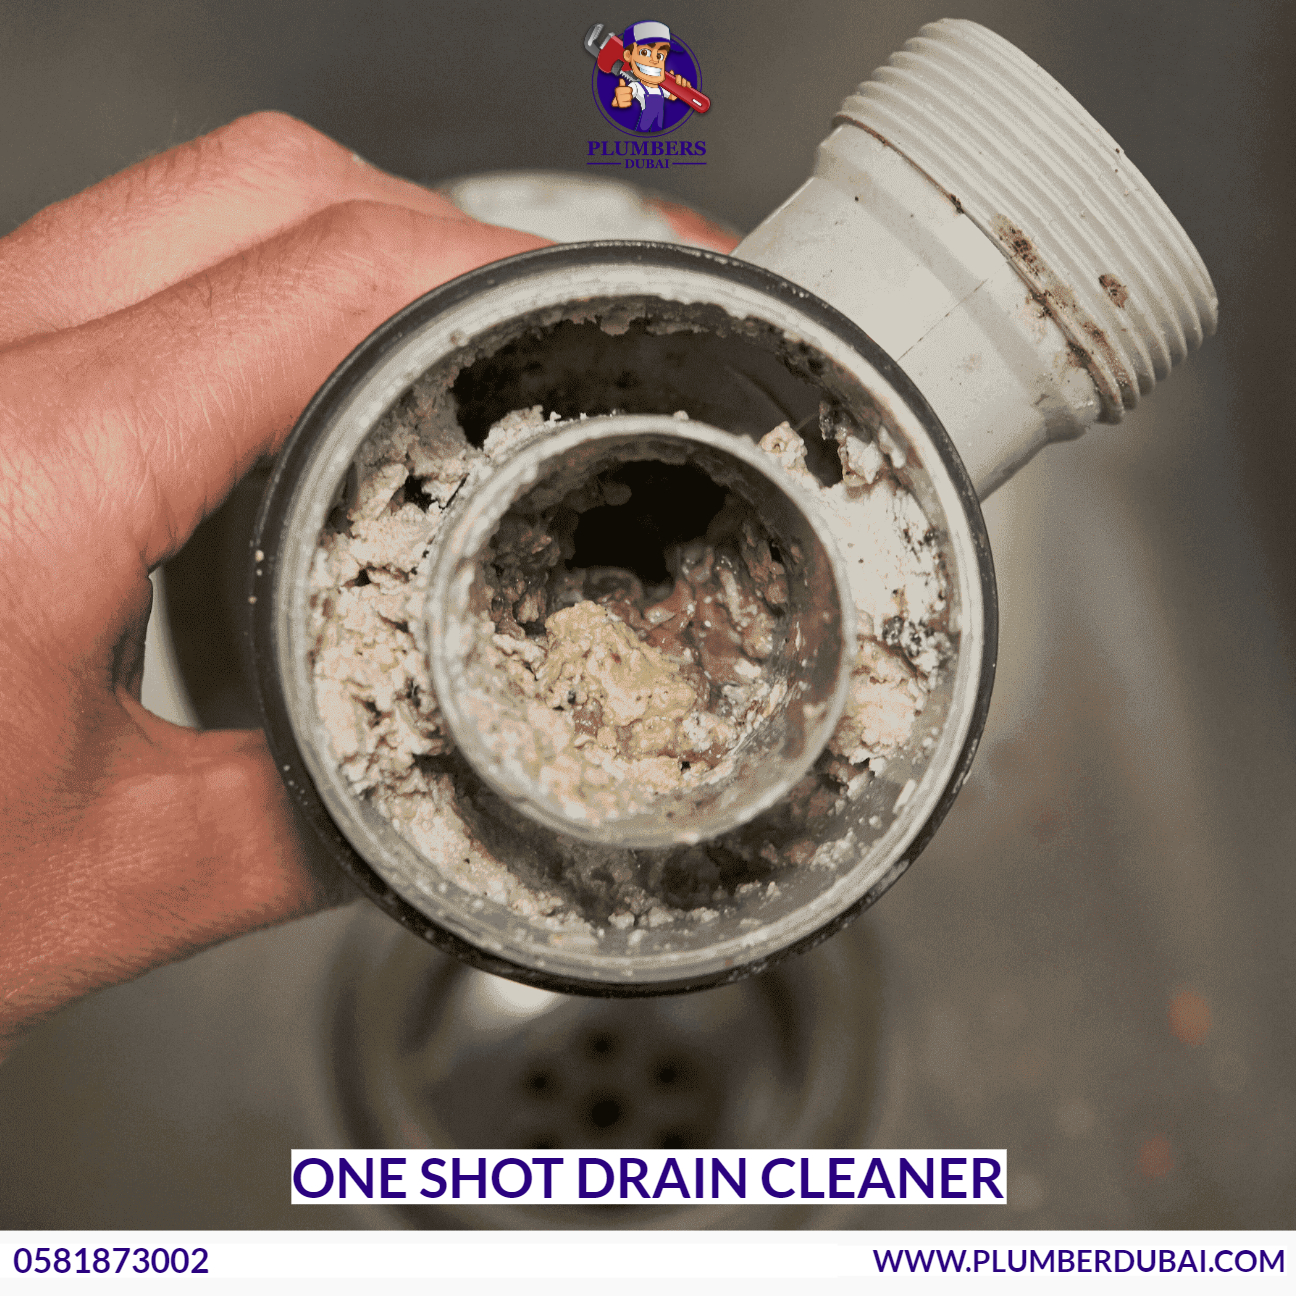 One shot drain cleaner